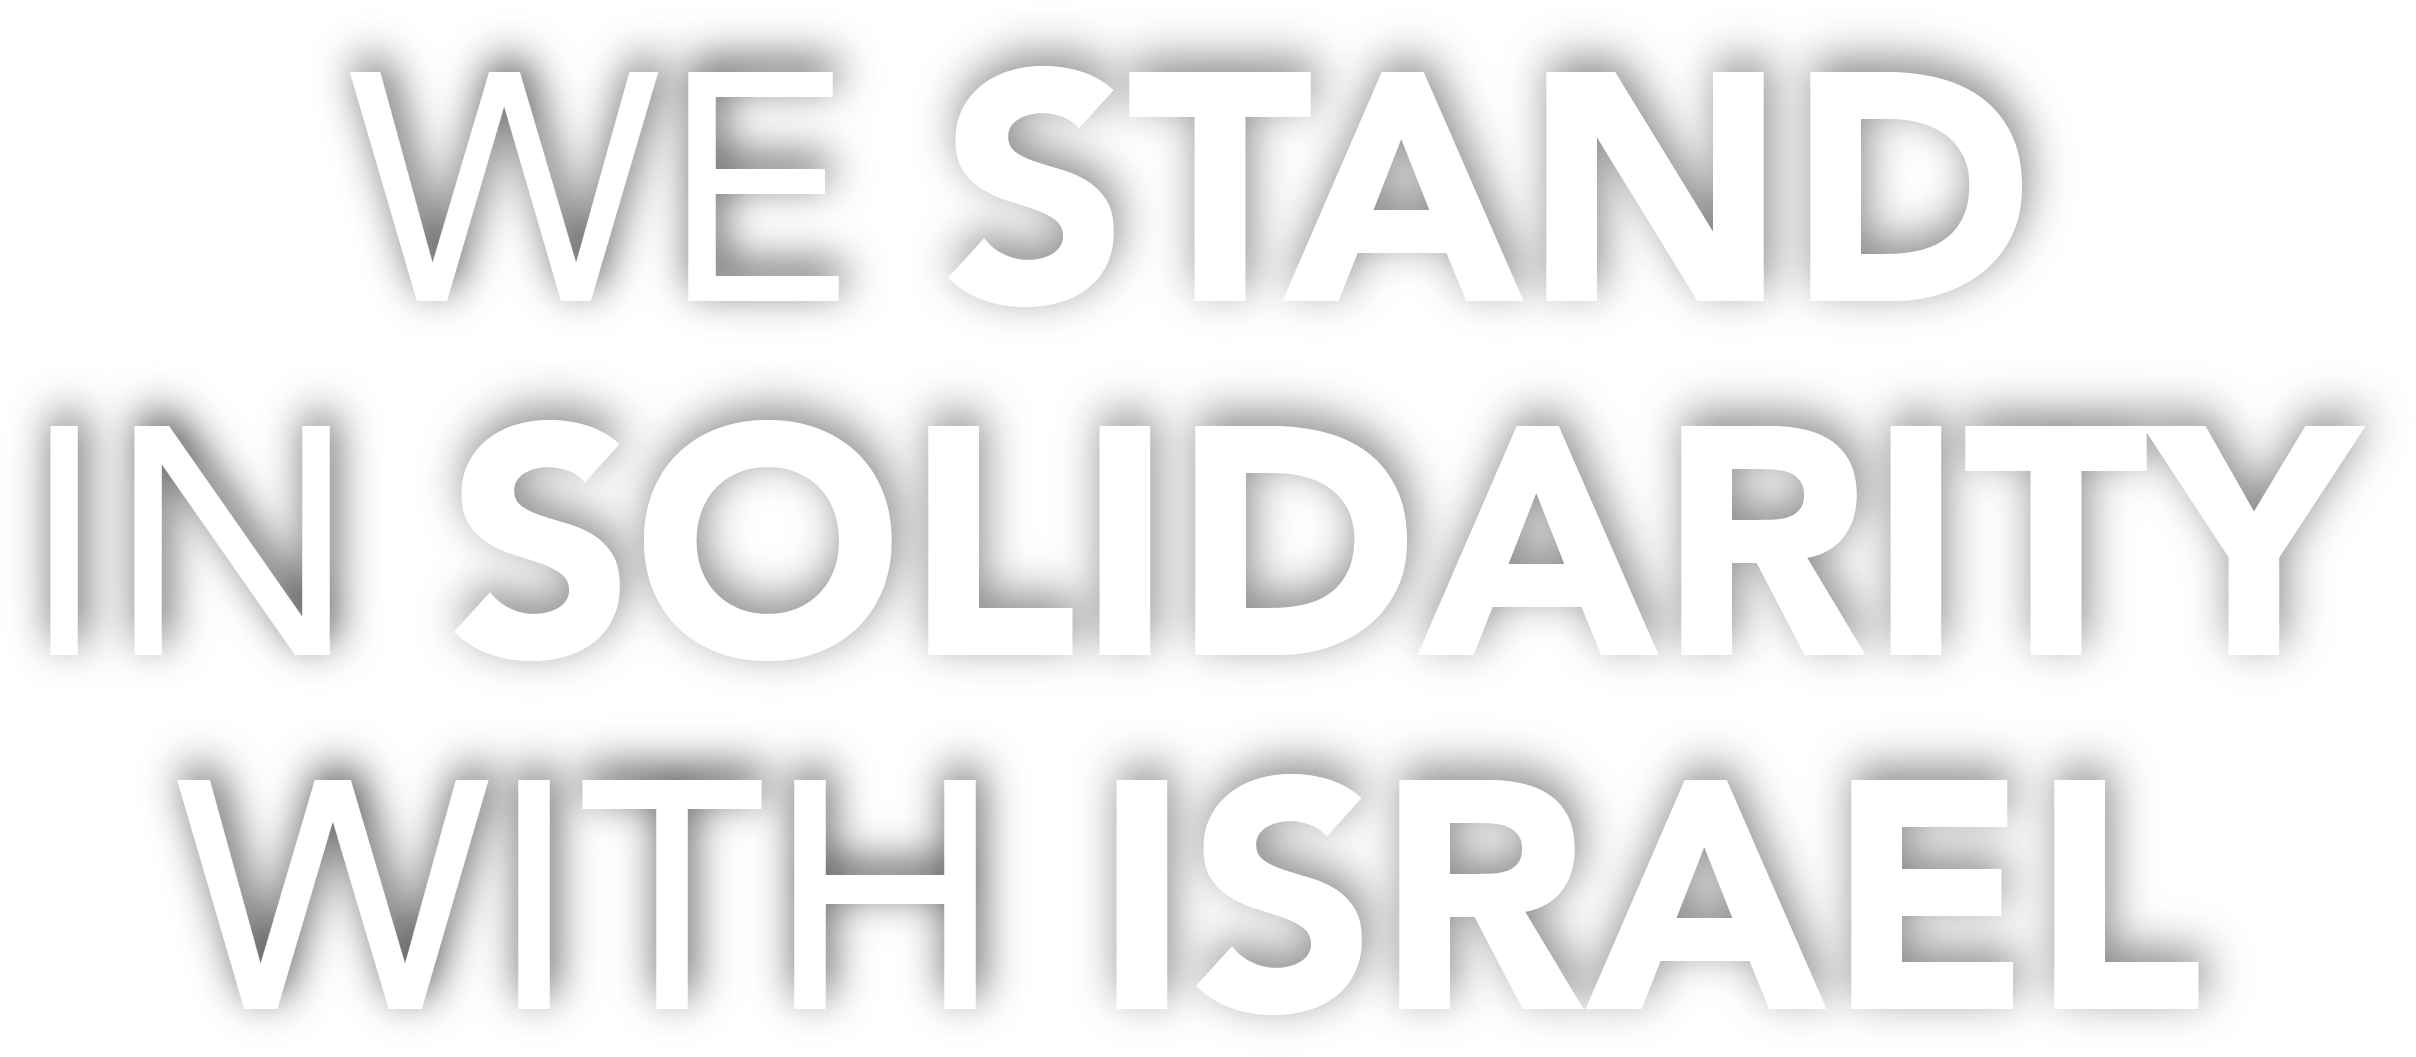 Pro-Israel? Know Israel! - Valley Beth Shalom